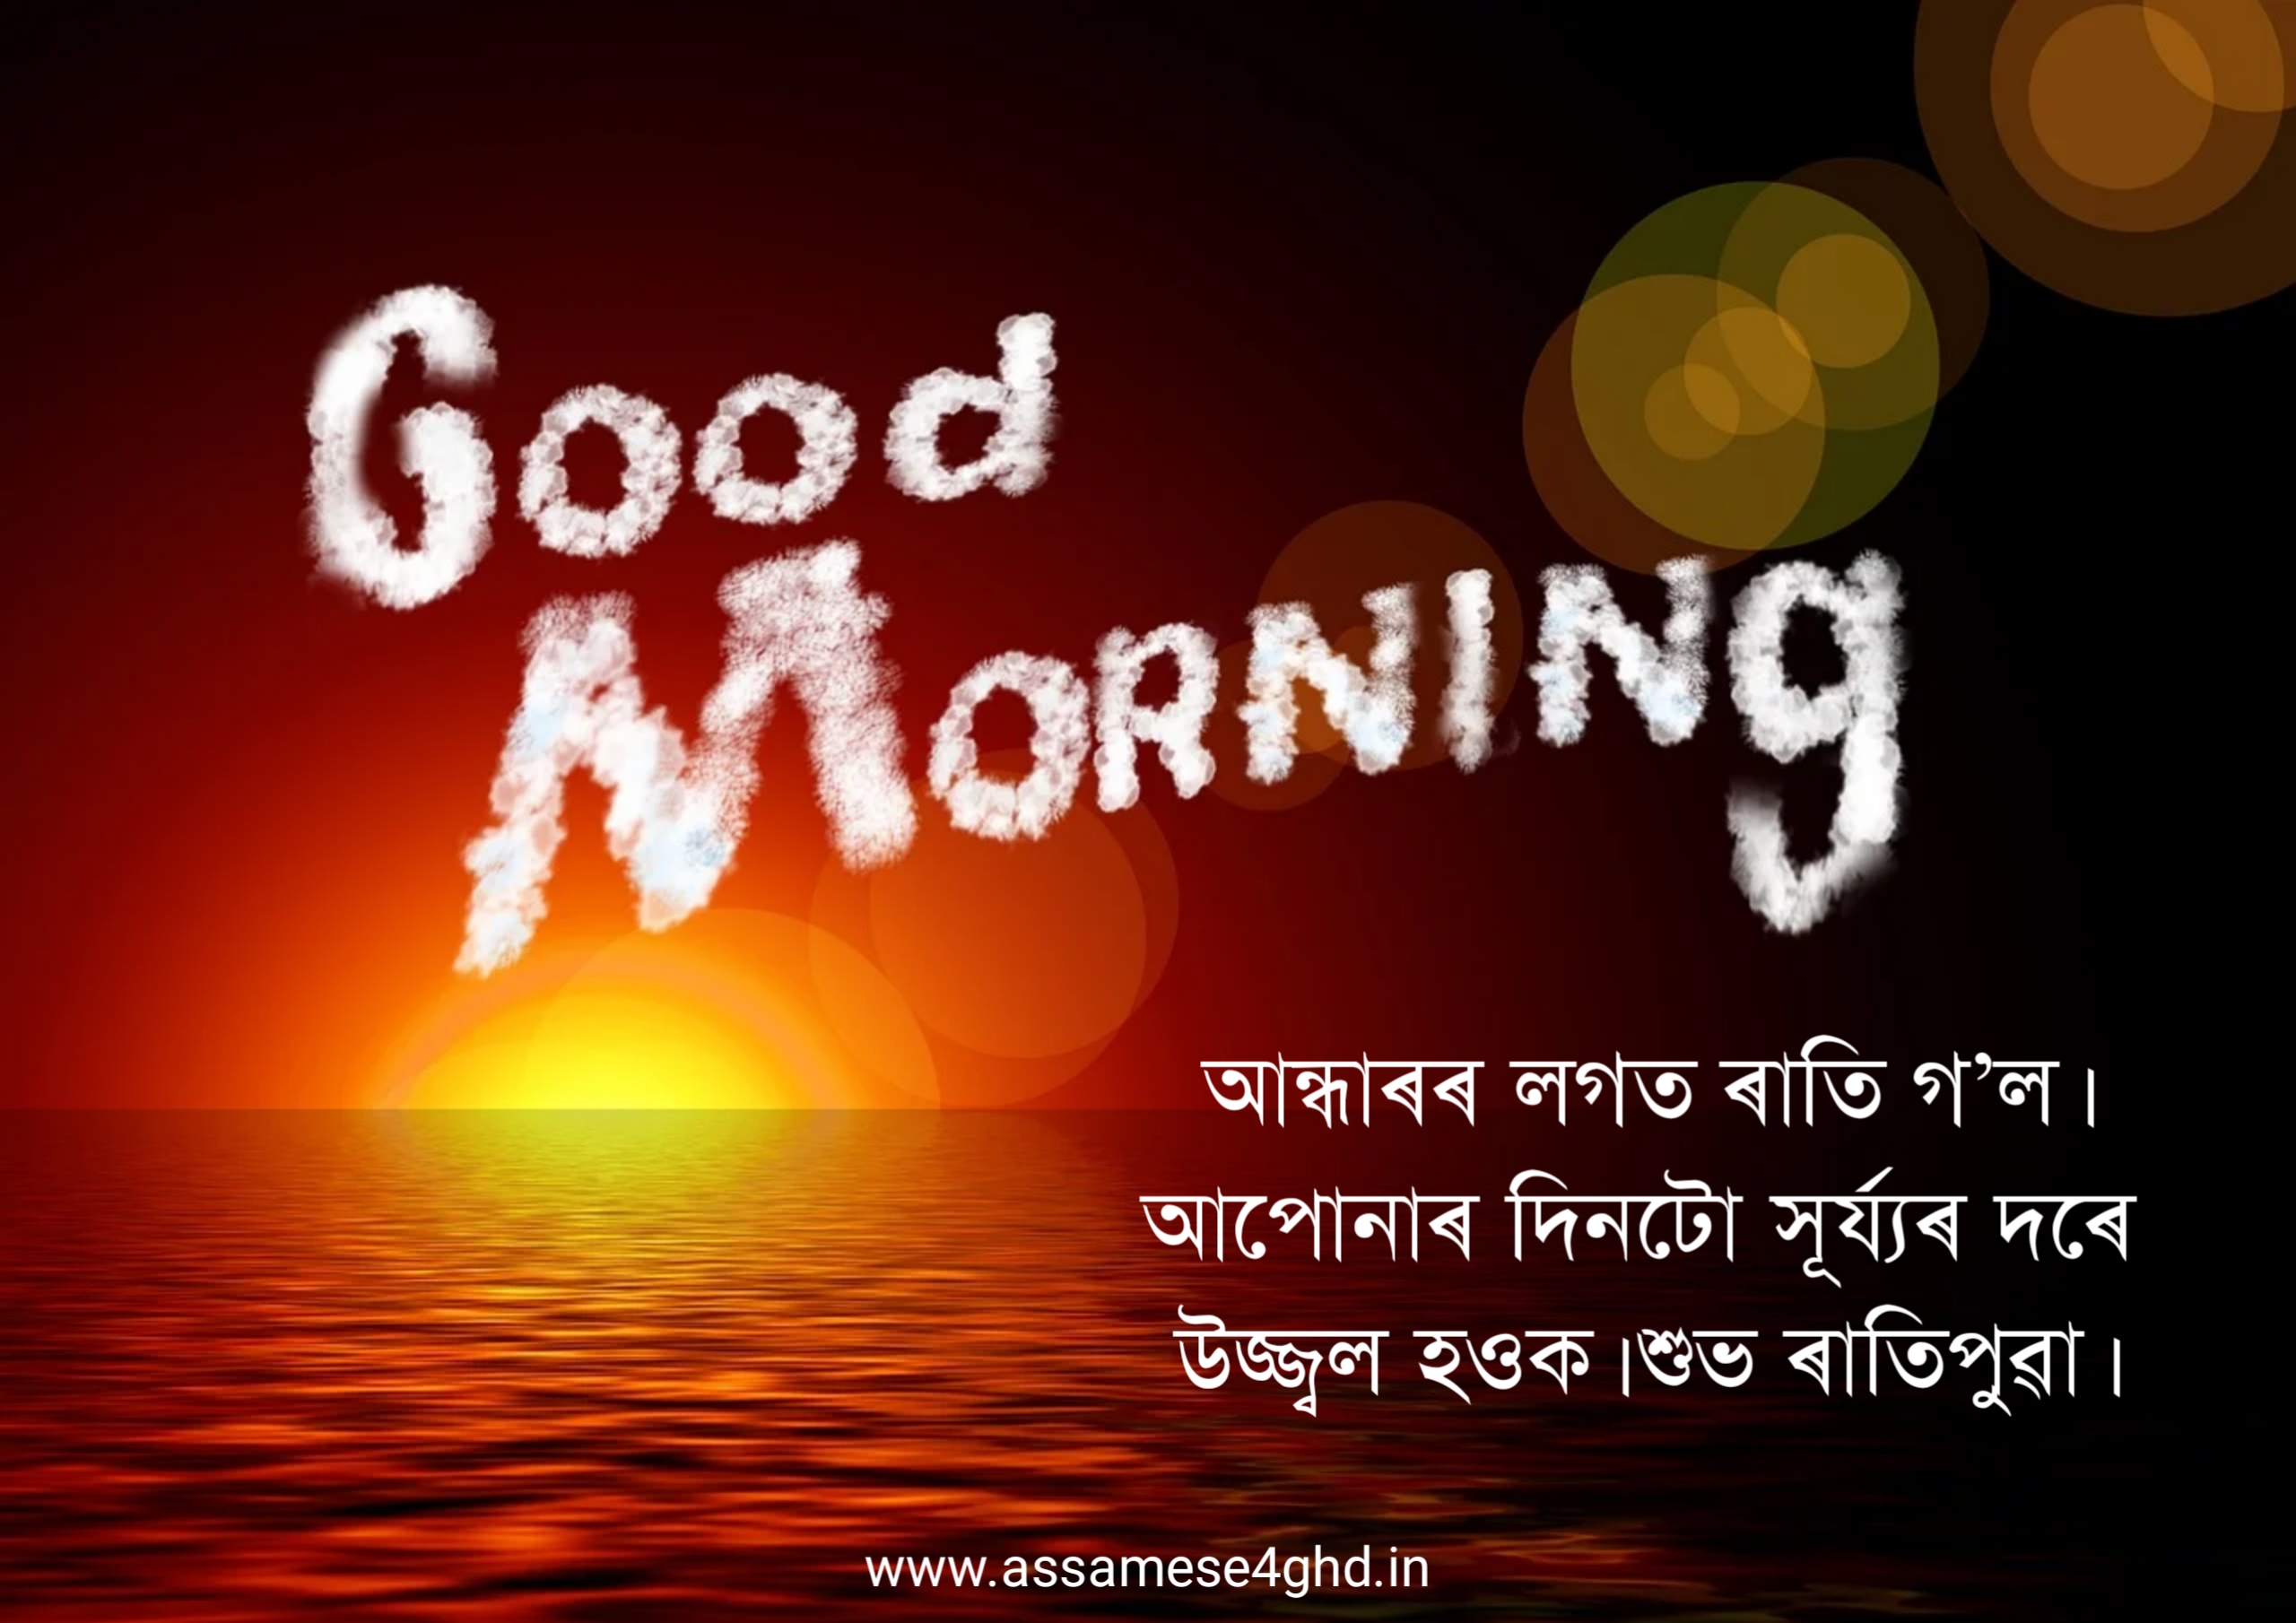 Morning Assamese Image